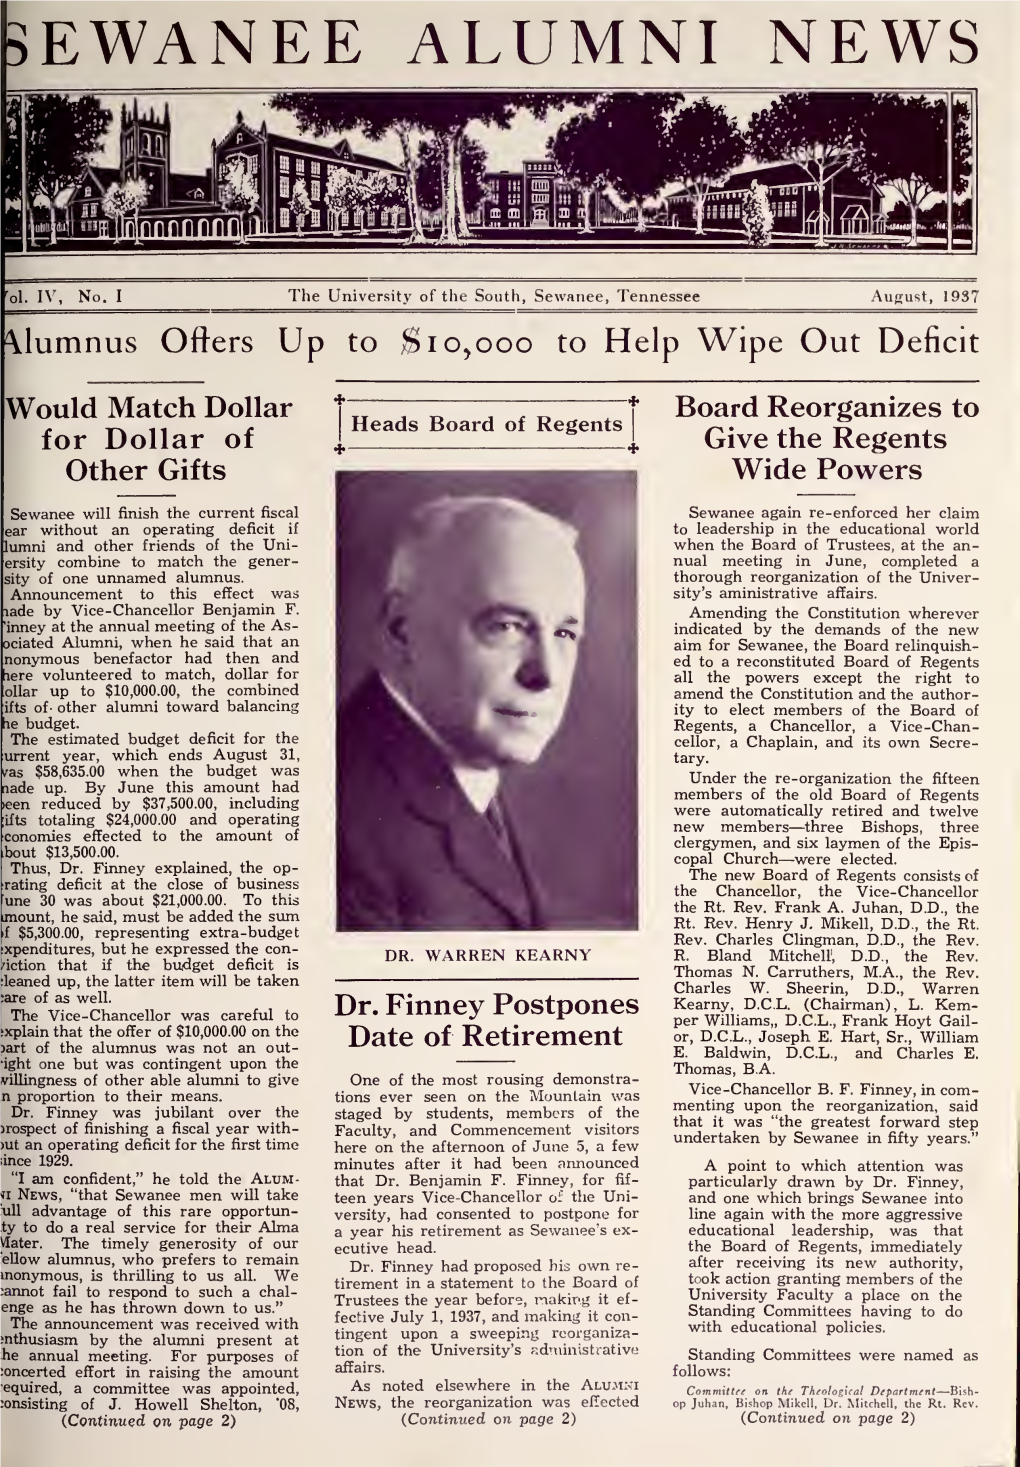 Sewanee Alumni News, 1937-38